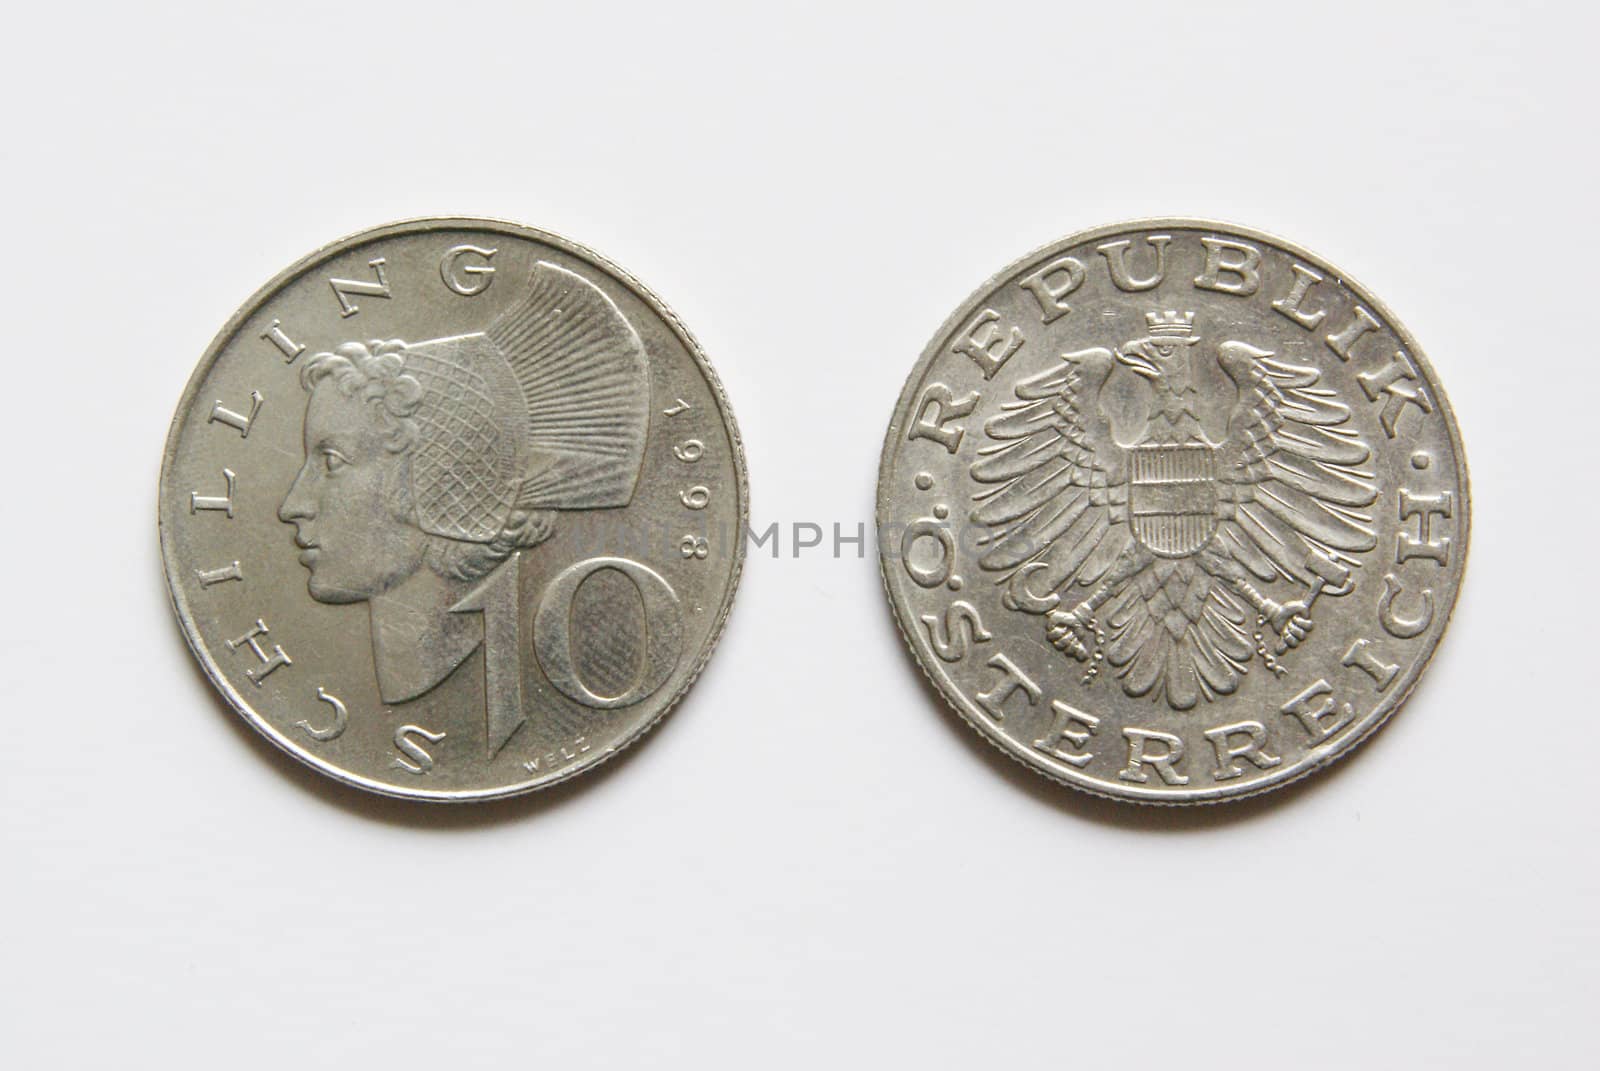 ld Austrian 10 Schilling coins (before Euro)

